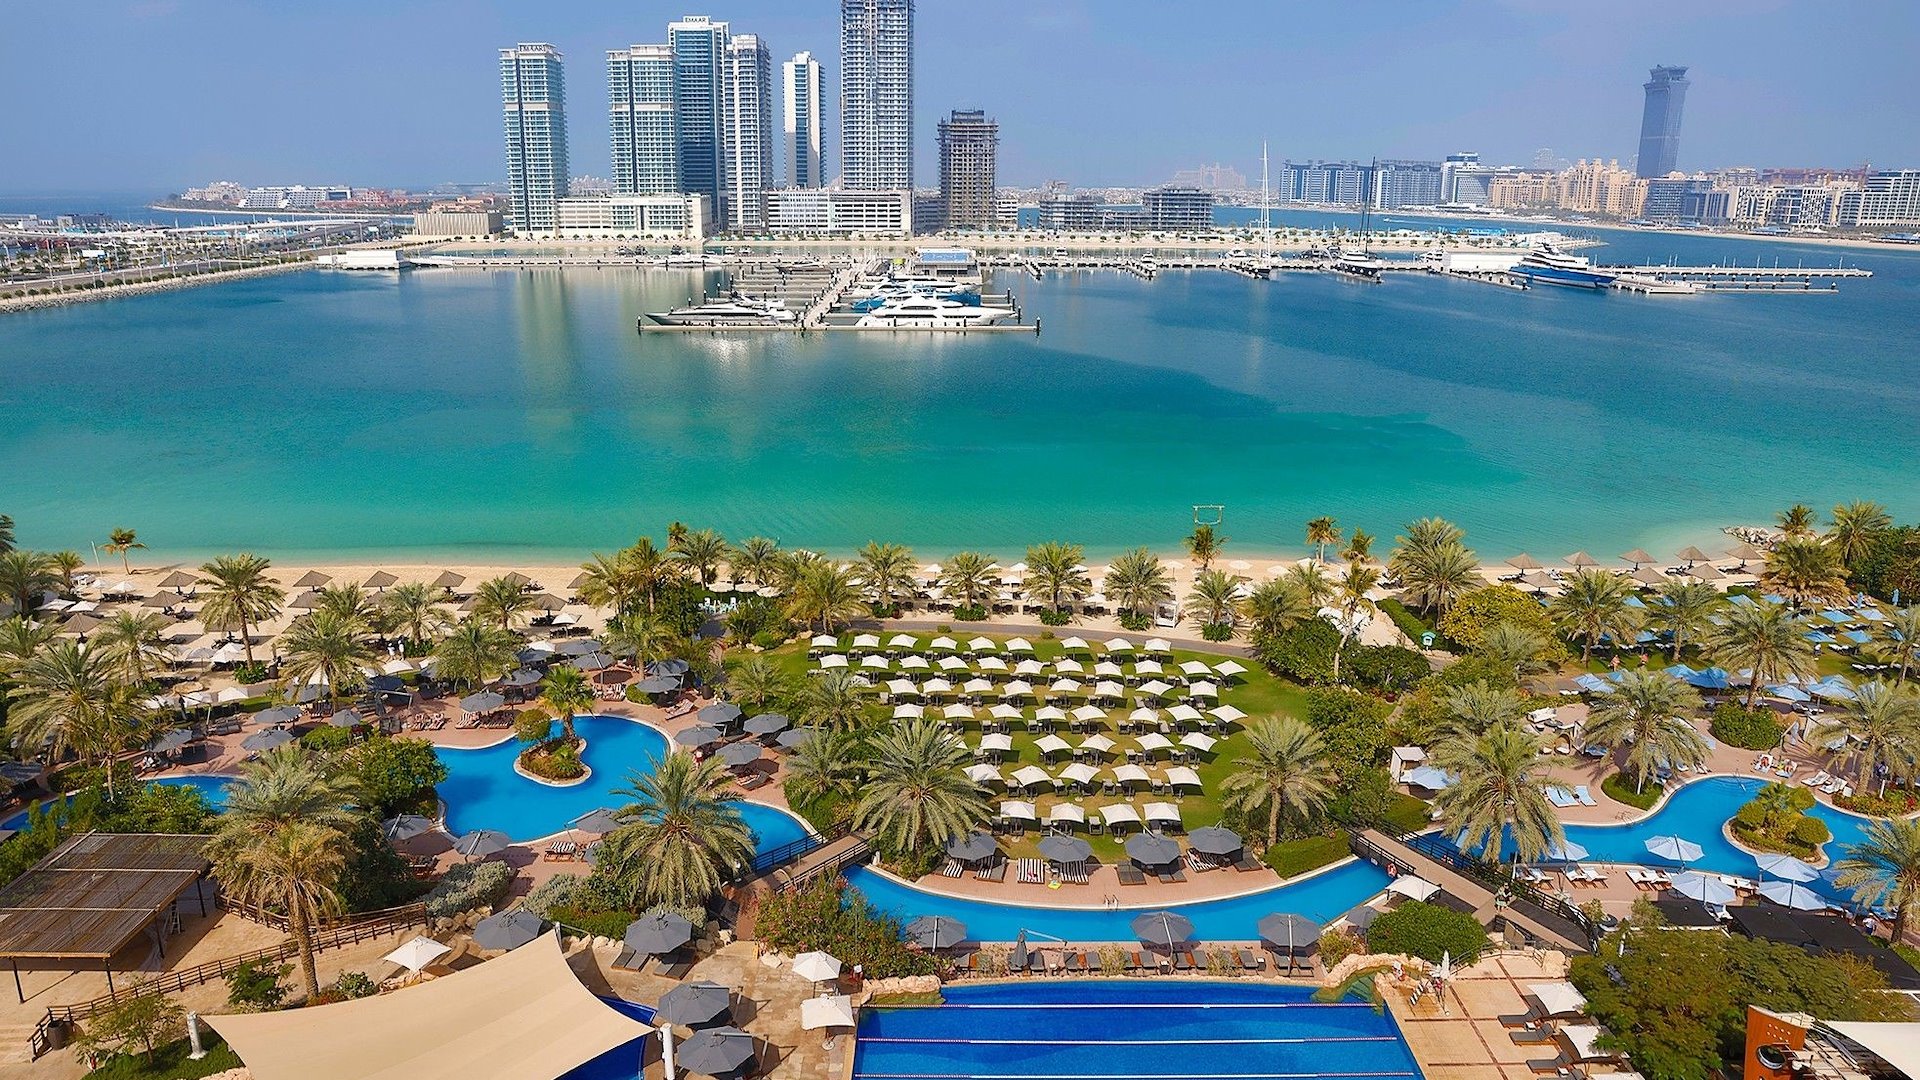 Destination Mina Seyahi Dubai Marina Beach Resort Complex